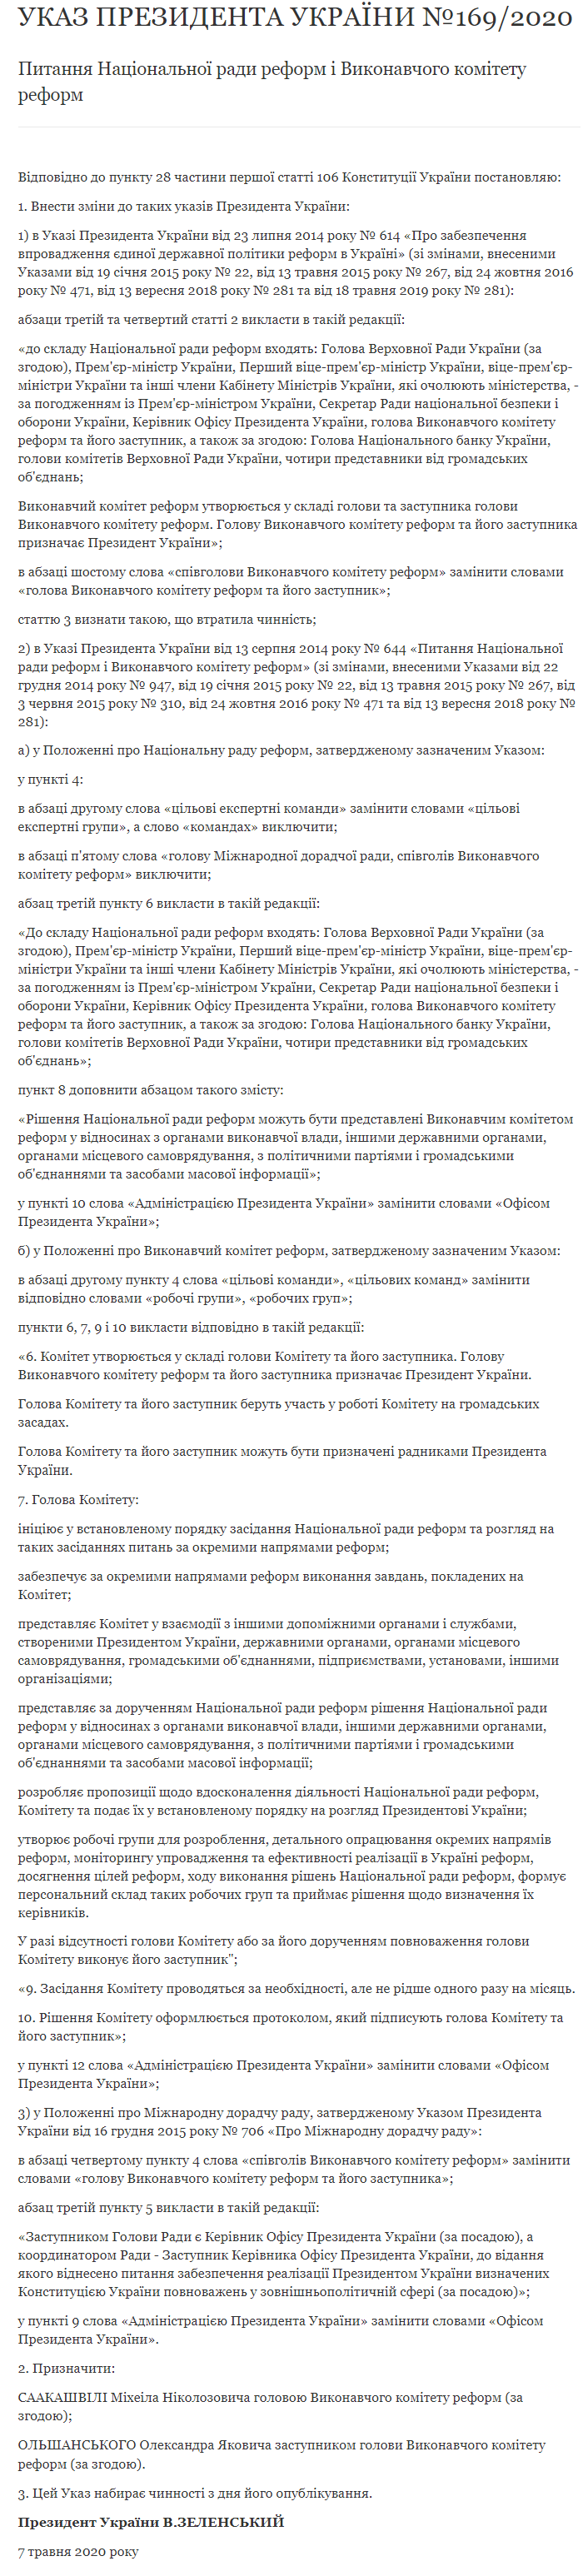 Указа Зеленского о назначении Саакашвили